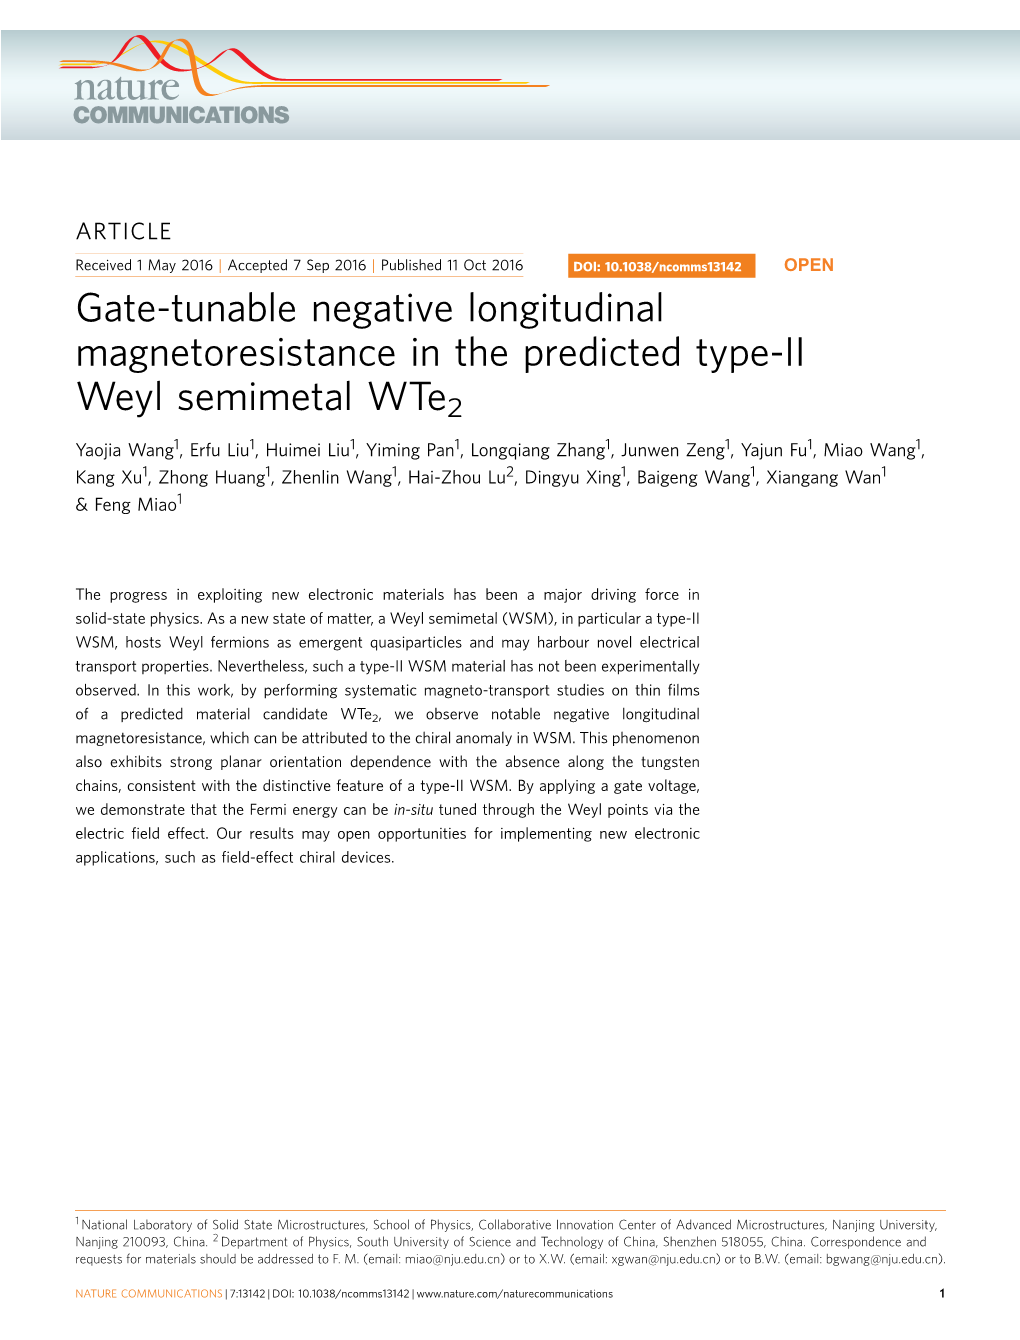 Gate-Tunable Negative Longitudinal Magnetoresistance in the Predicted Type-II Weyl Semimetal Wte2